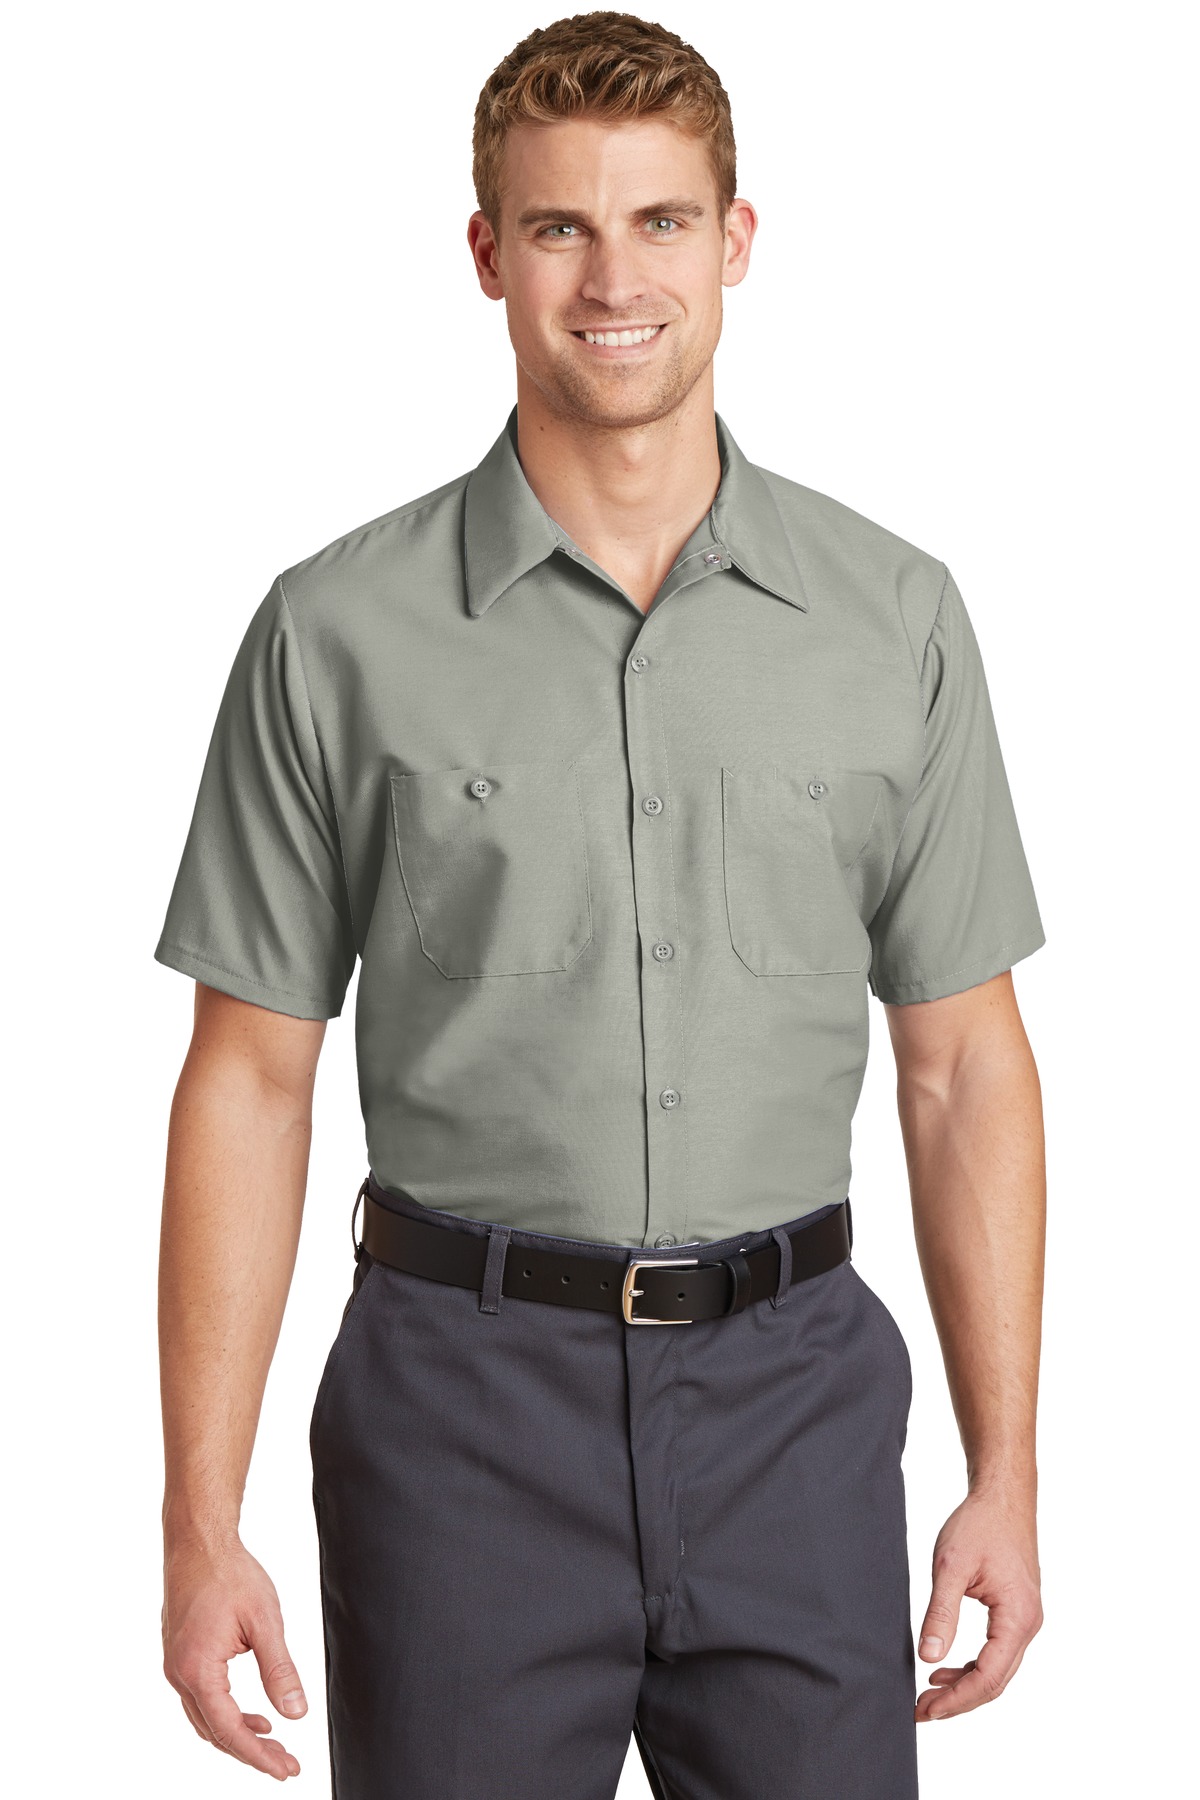 Red Kap Mens Size Industrial Work Shirt Regular Fit 5X-Large/Tall Navy Short Sleeve